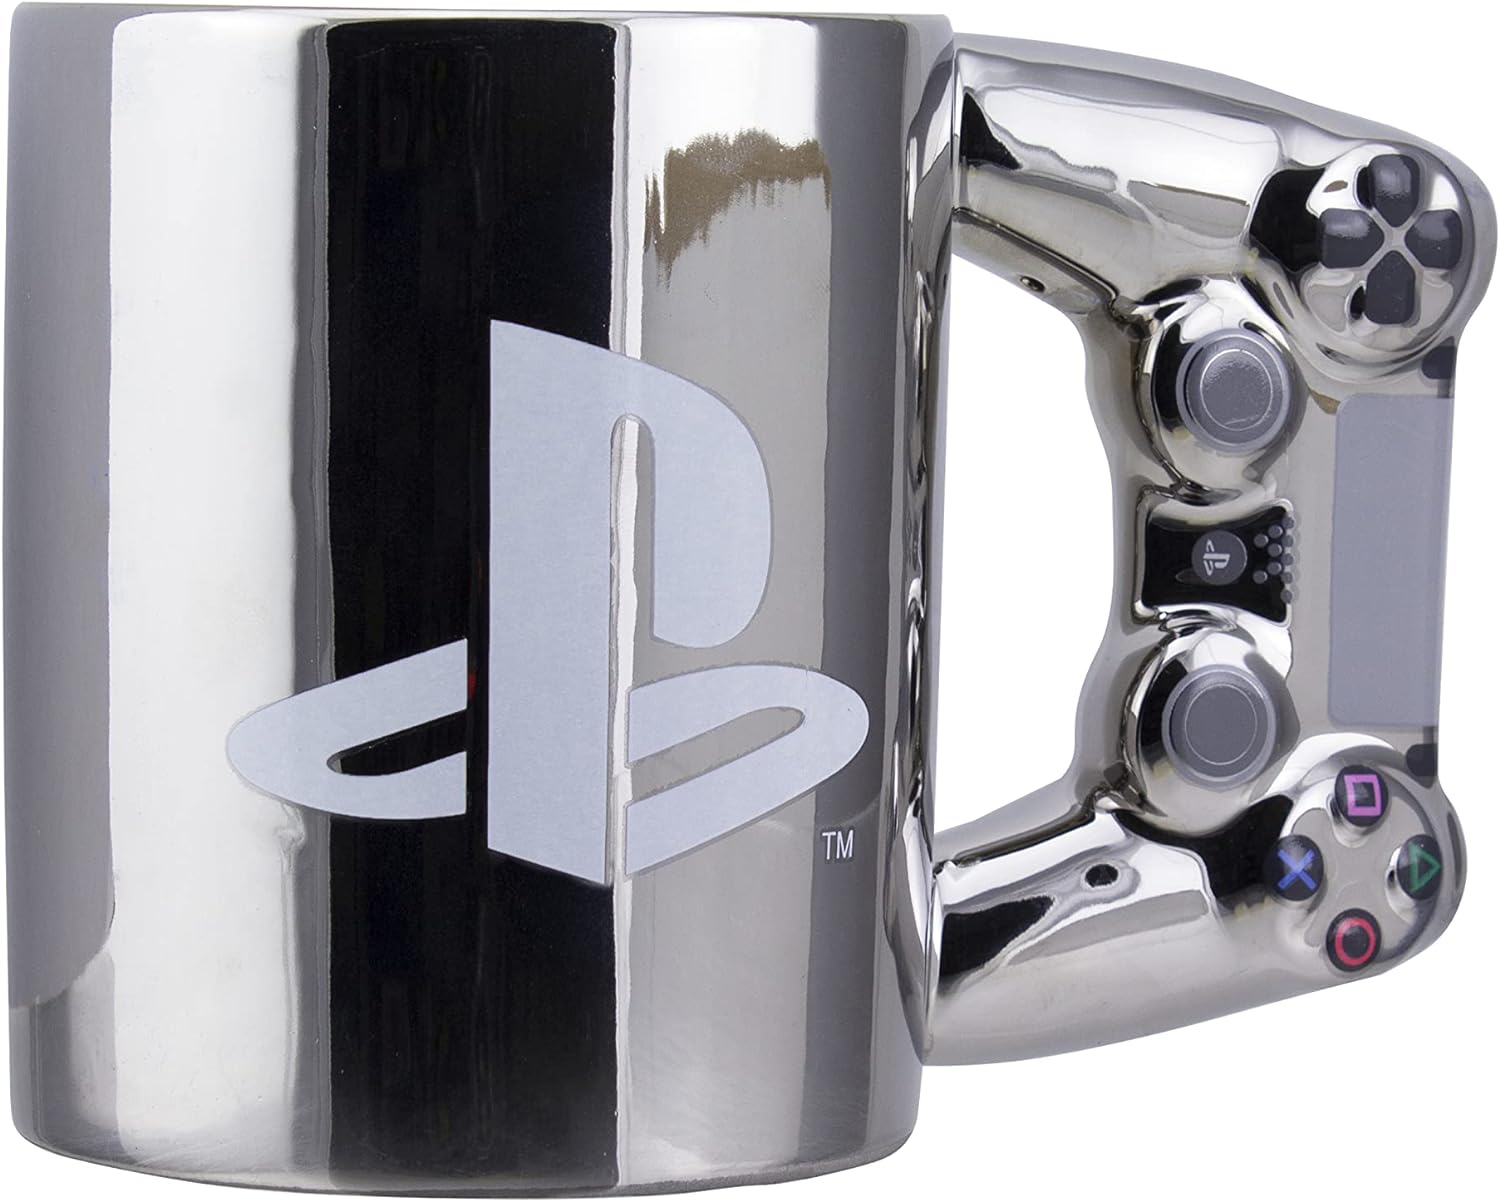 Paladone Playstation DS4 Silver Controller Mug, Ceramic Coffee Mug for Gamers, 550 ml